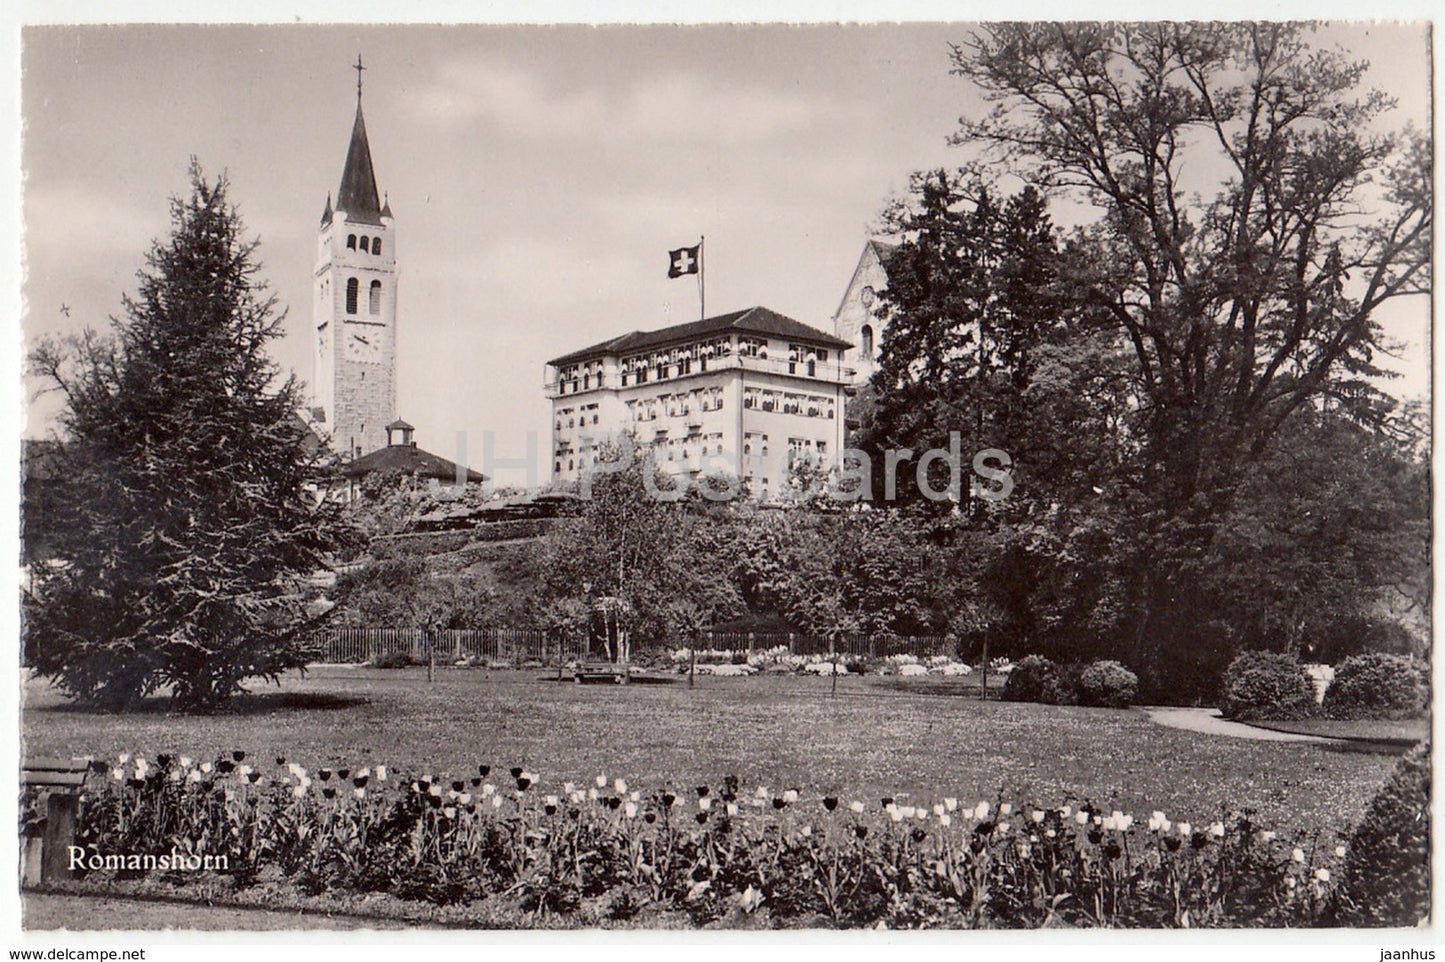 Romanshorn - Alkoholfr. Volksheim u. Gasthaus z. Schloss Romanshorn - castle - Switzerland - old postcard - unused - JH Postcards